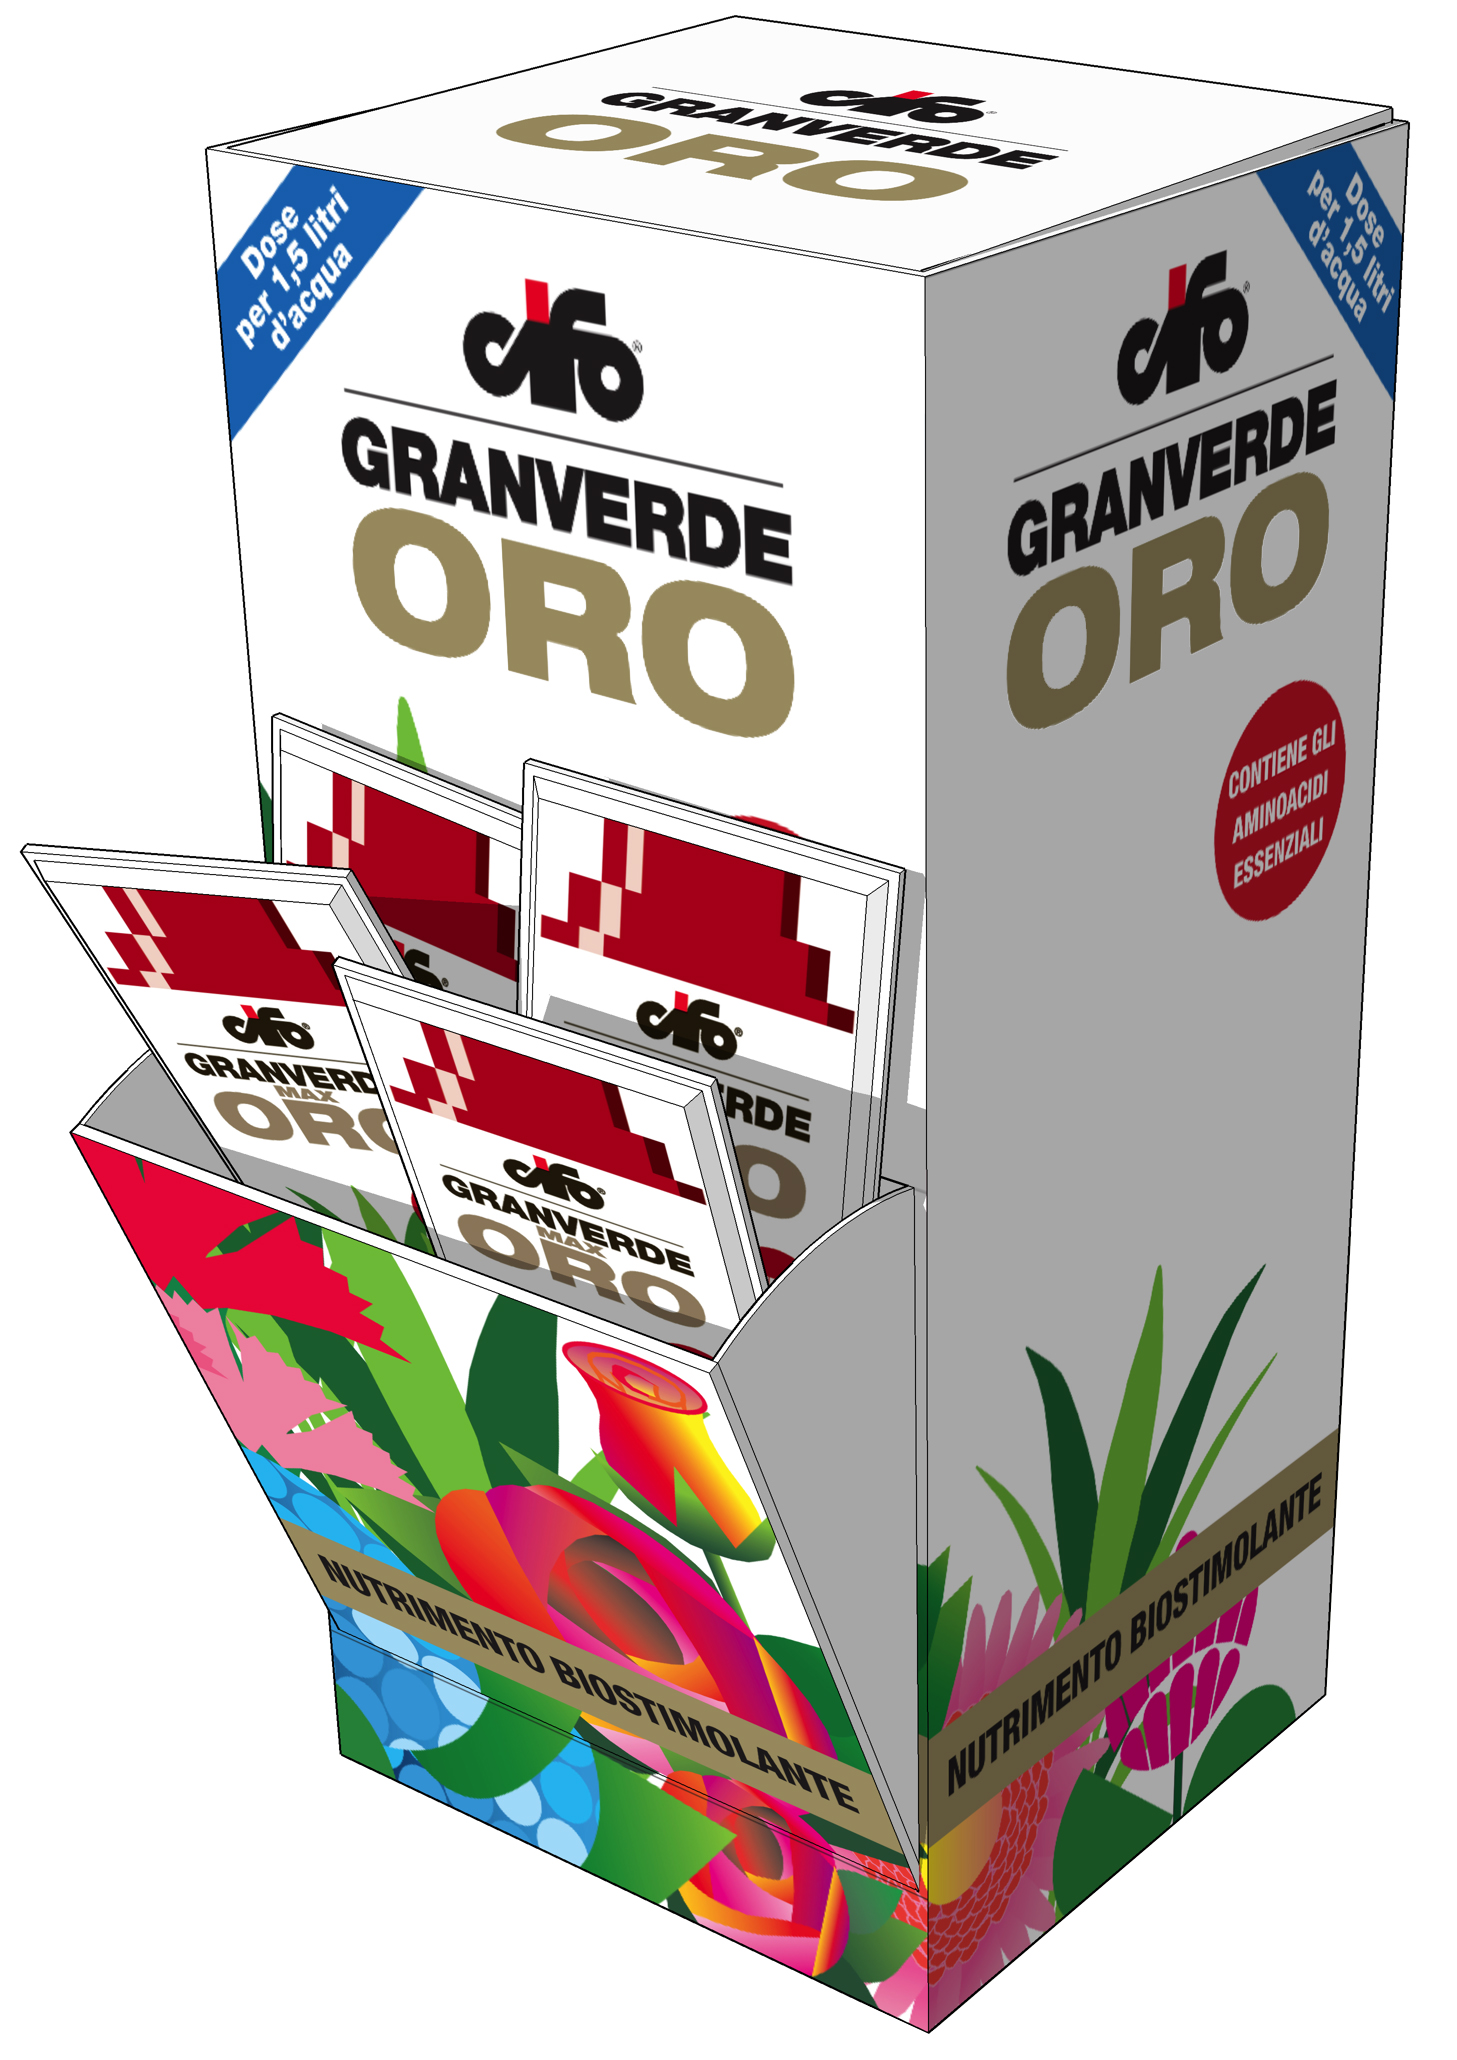 CIFO SPA - GRANVERDE ORCHIDEE